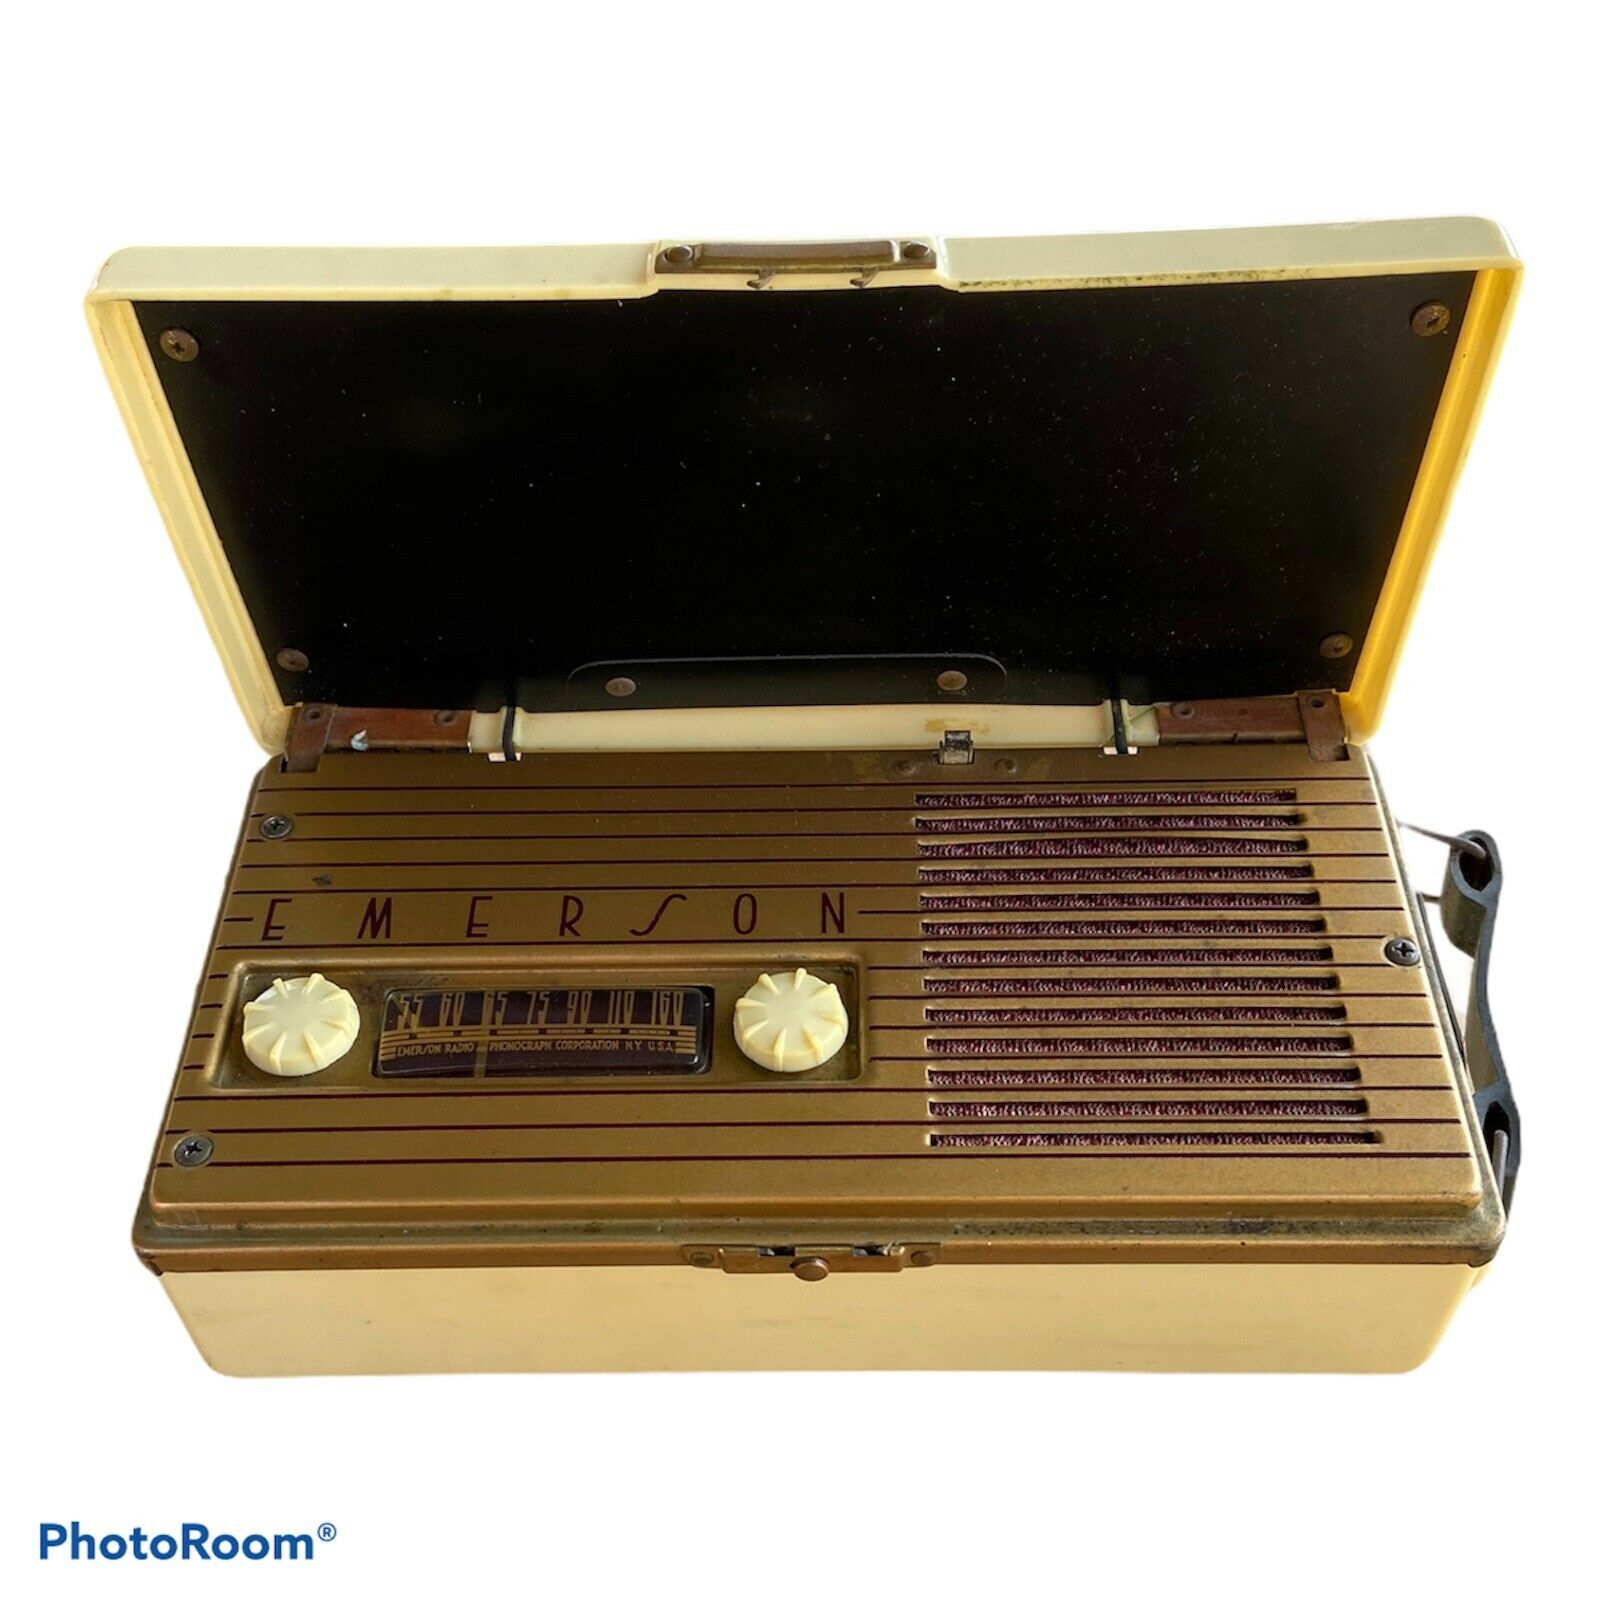 Vintage 1948 Emerson Radio Model 558 Bakelite Case Portable Rare